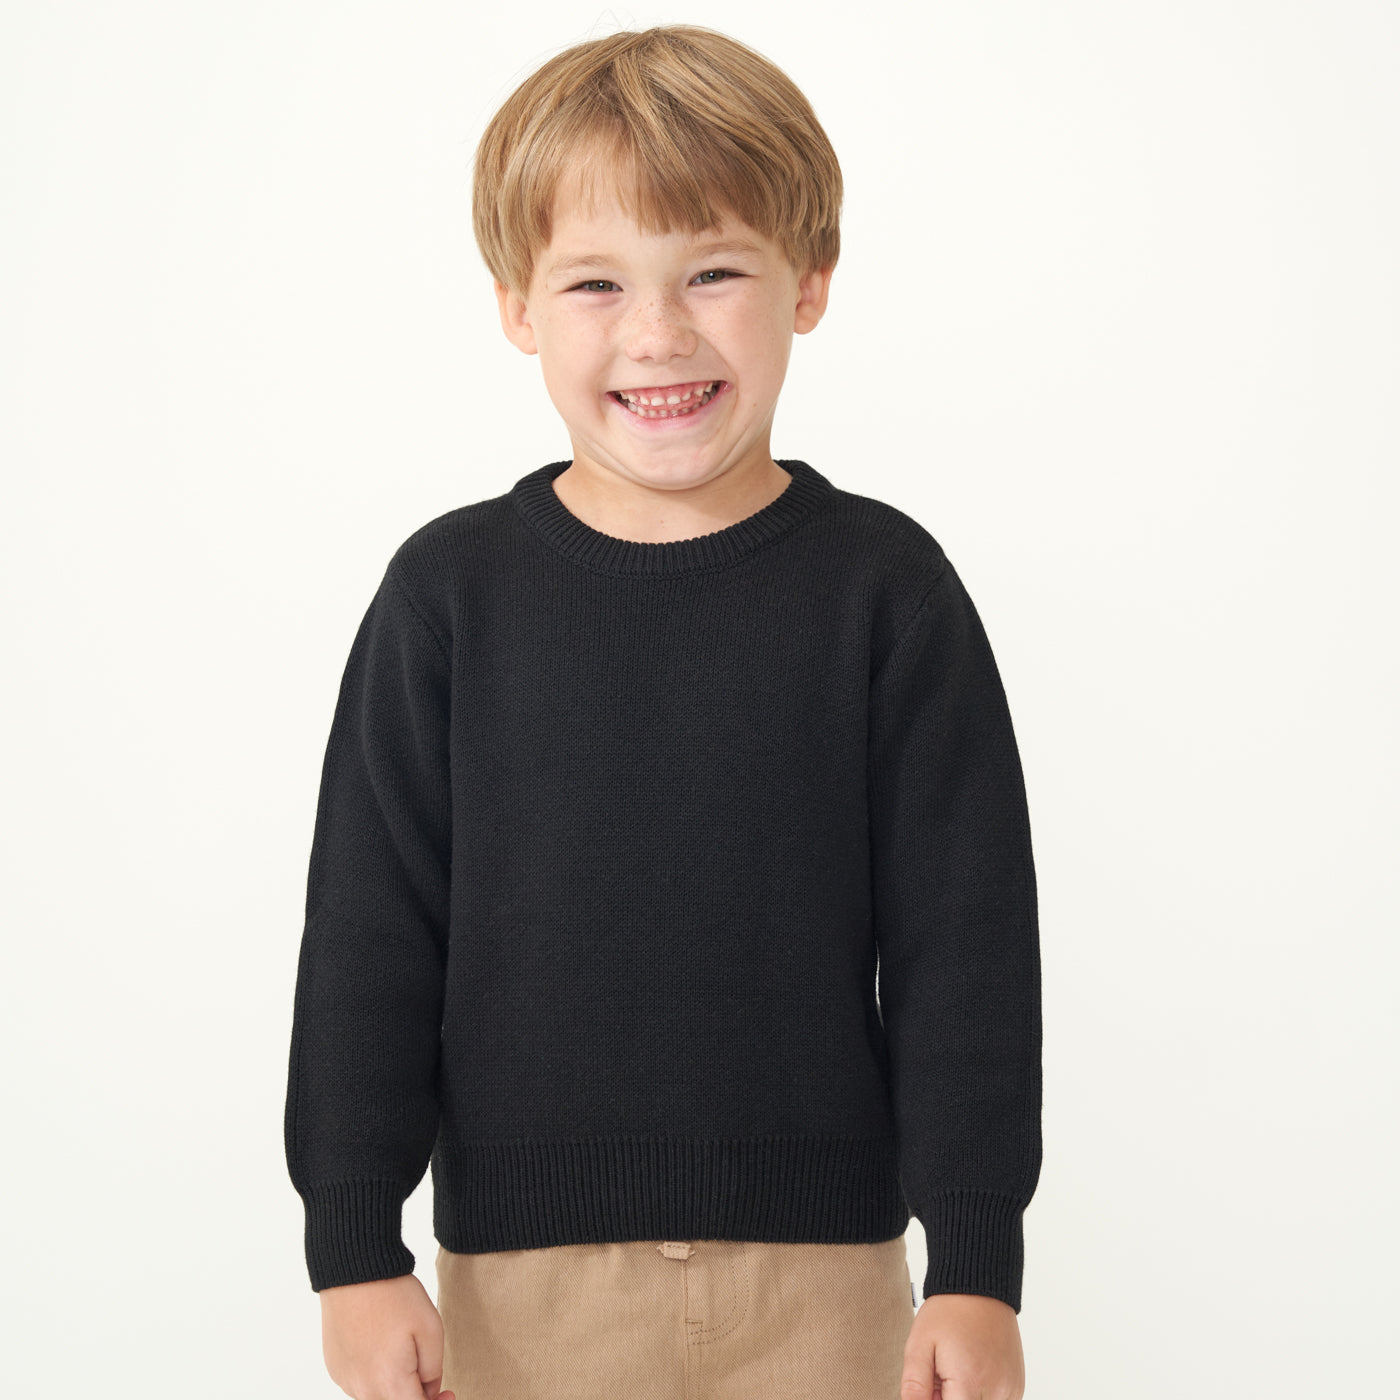 Child wearing a Black knit sweater